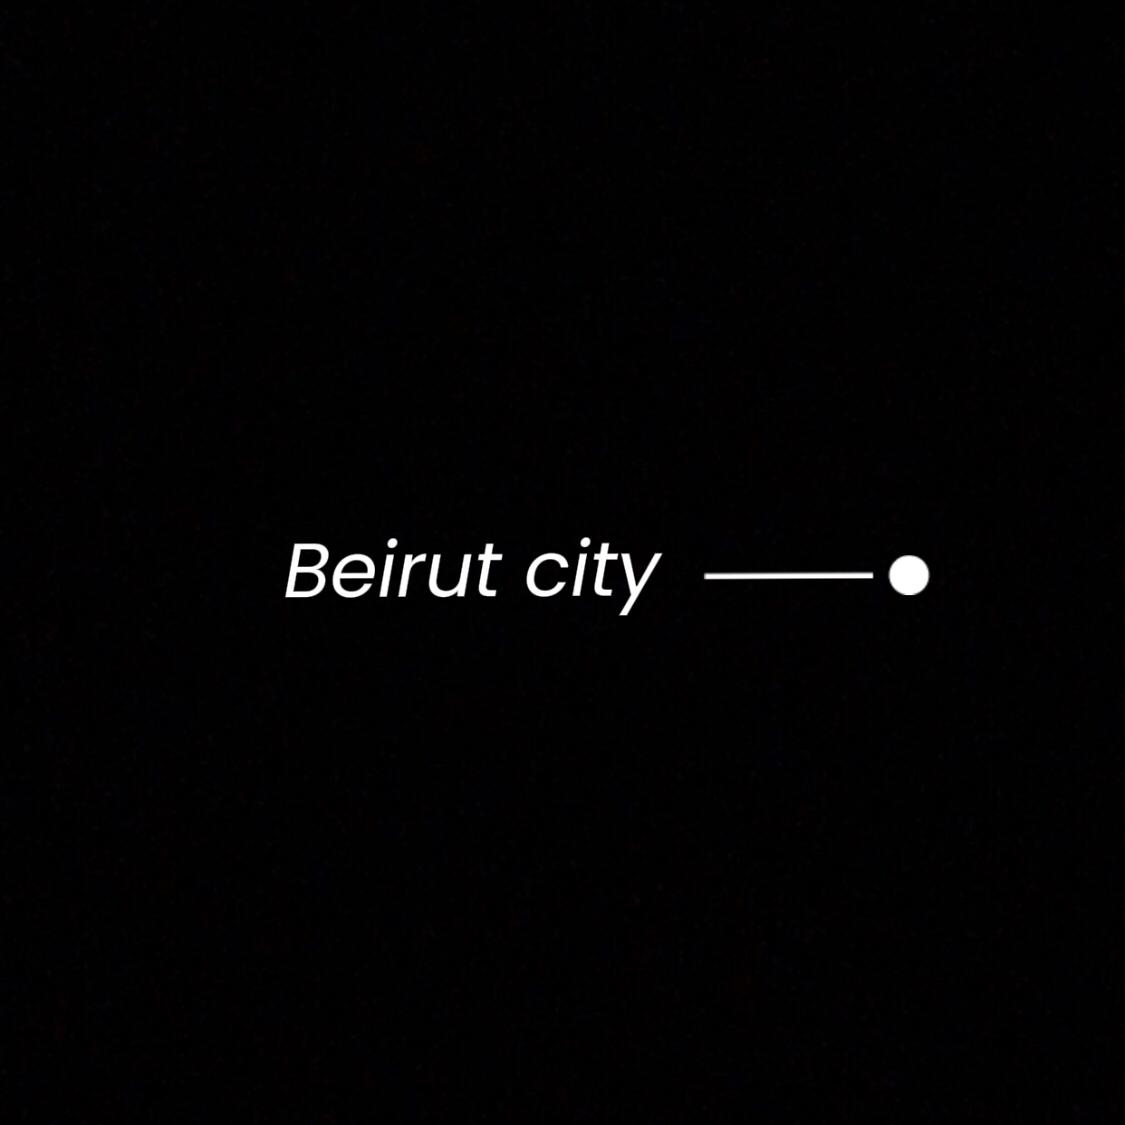 Beirut city